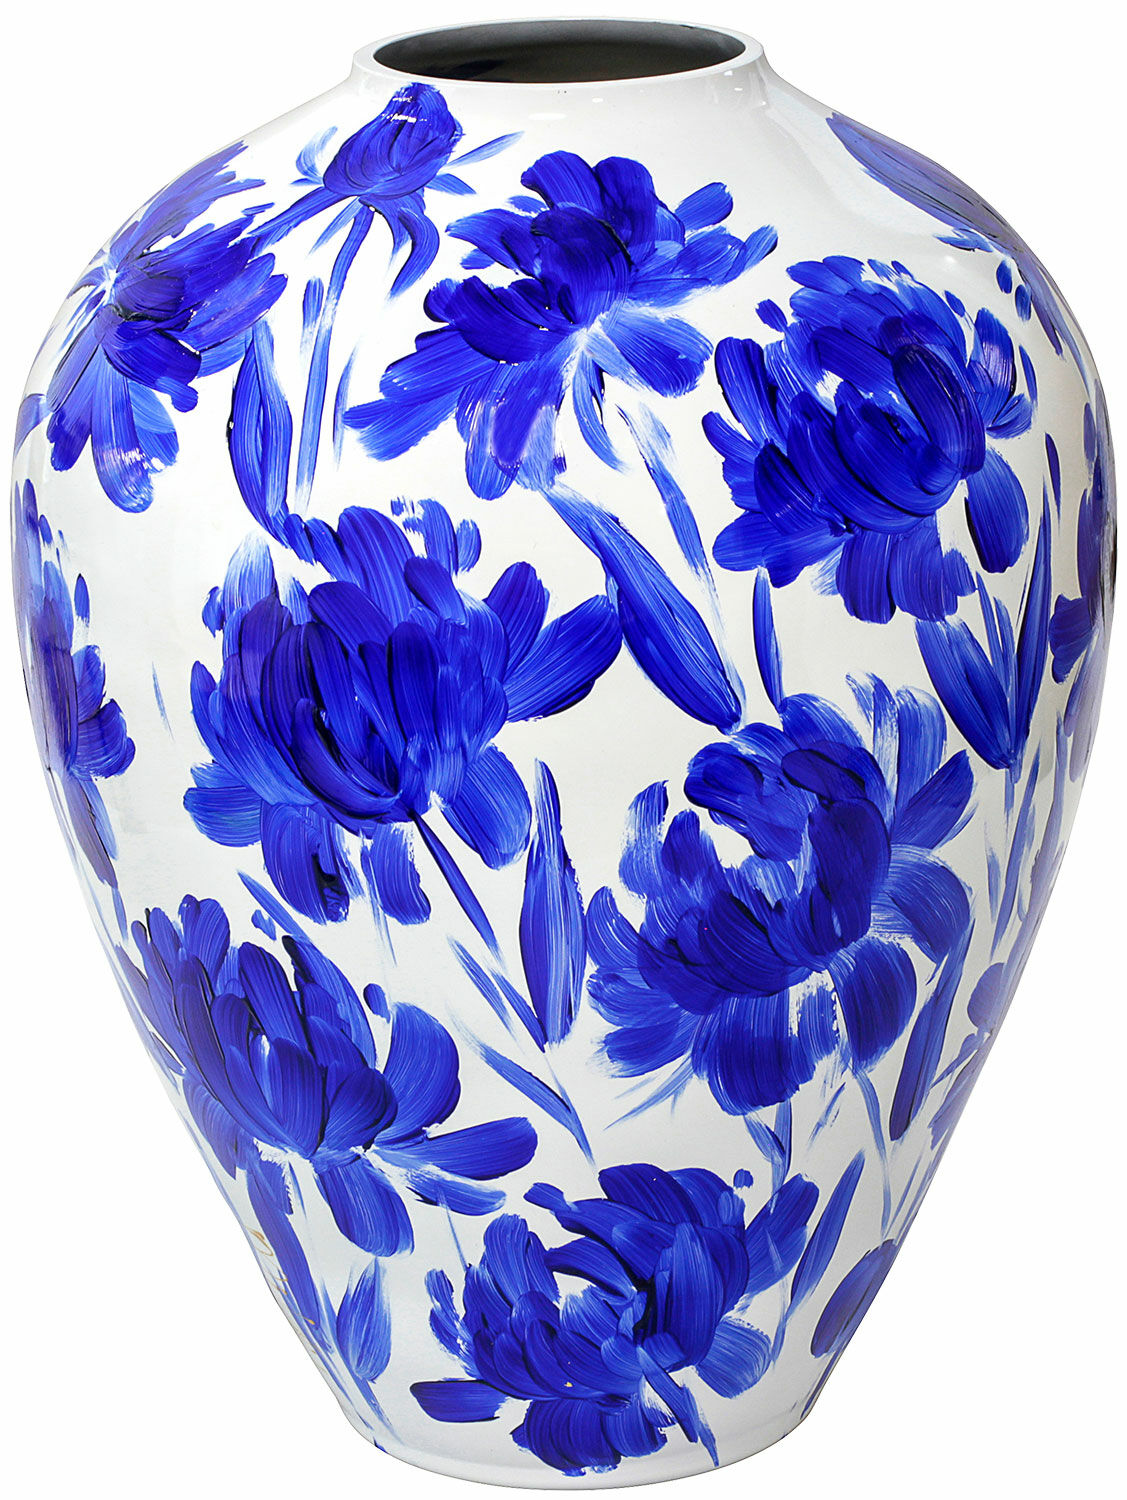 Glass vase "Blue Dahlia" by Milou van Schaik Martinet